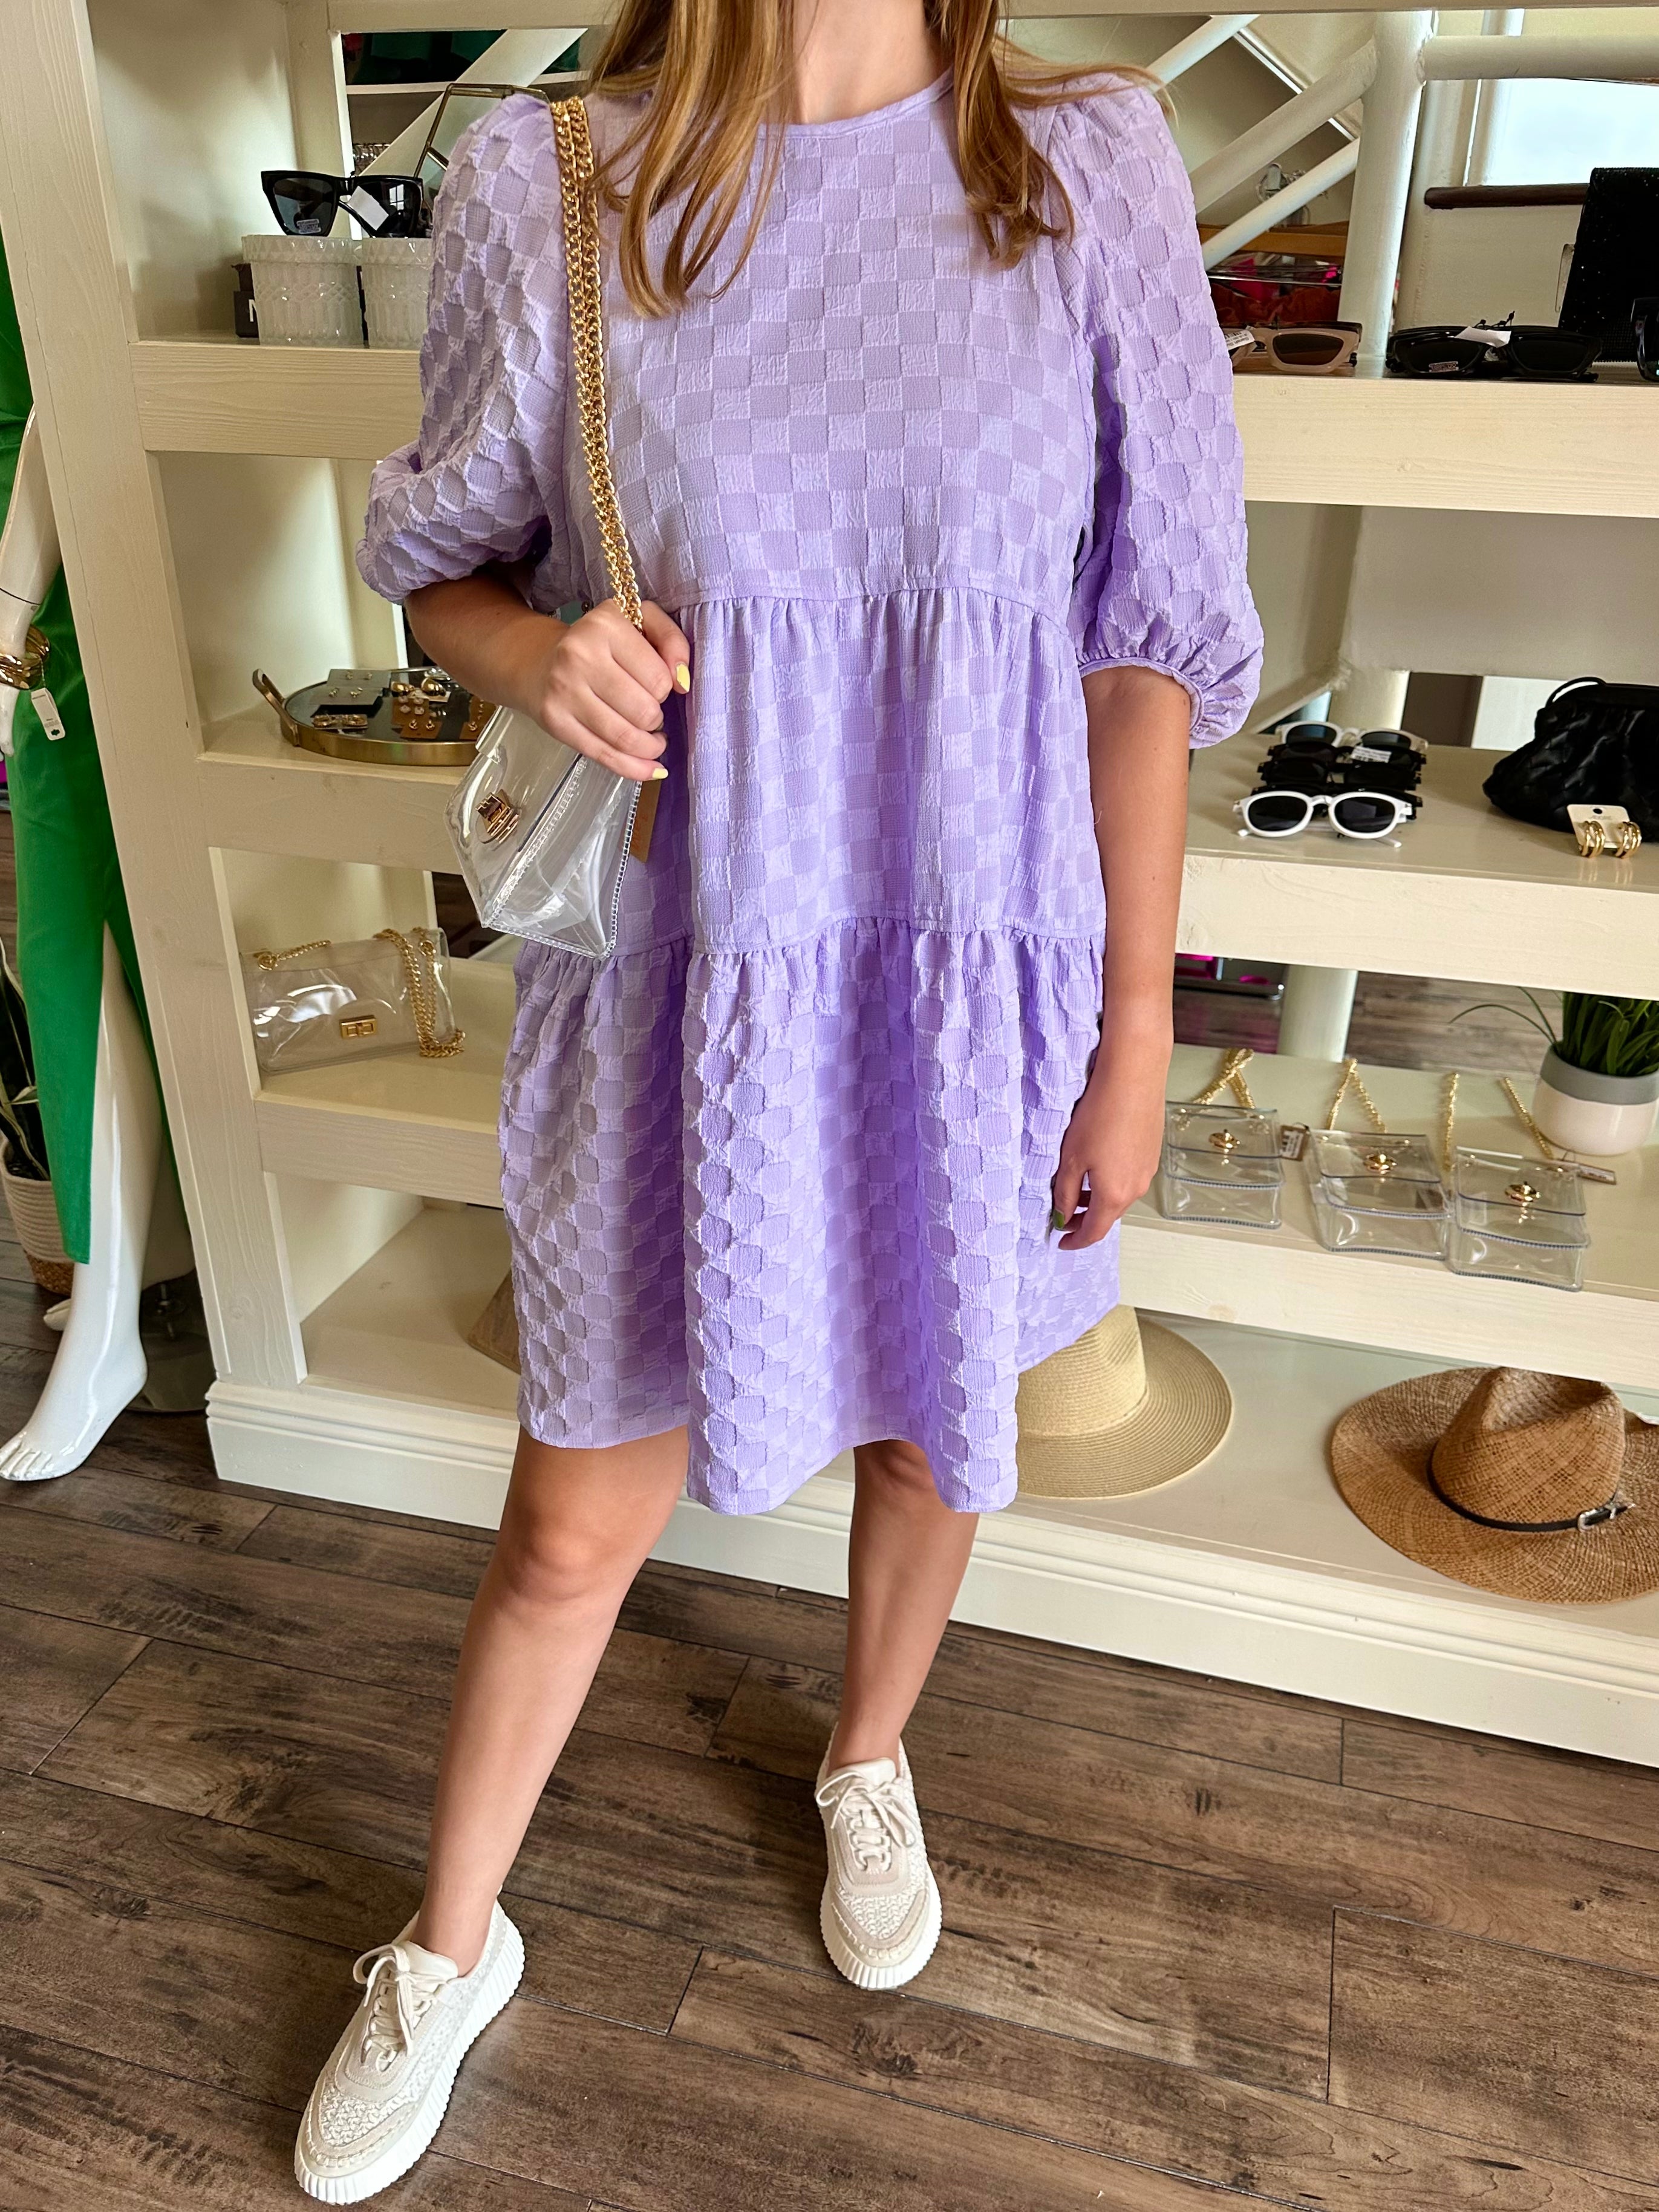 Lavender Checker Dress